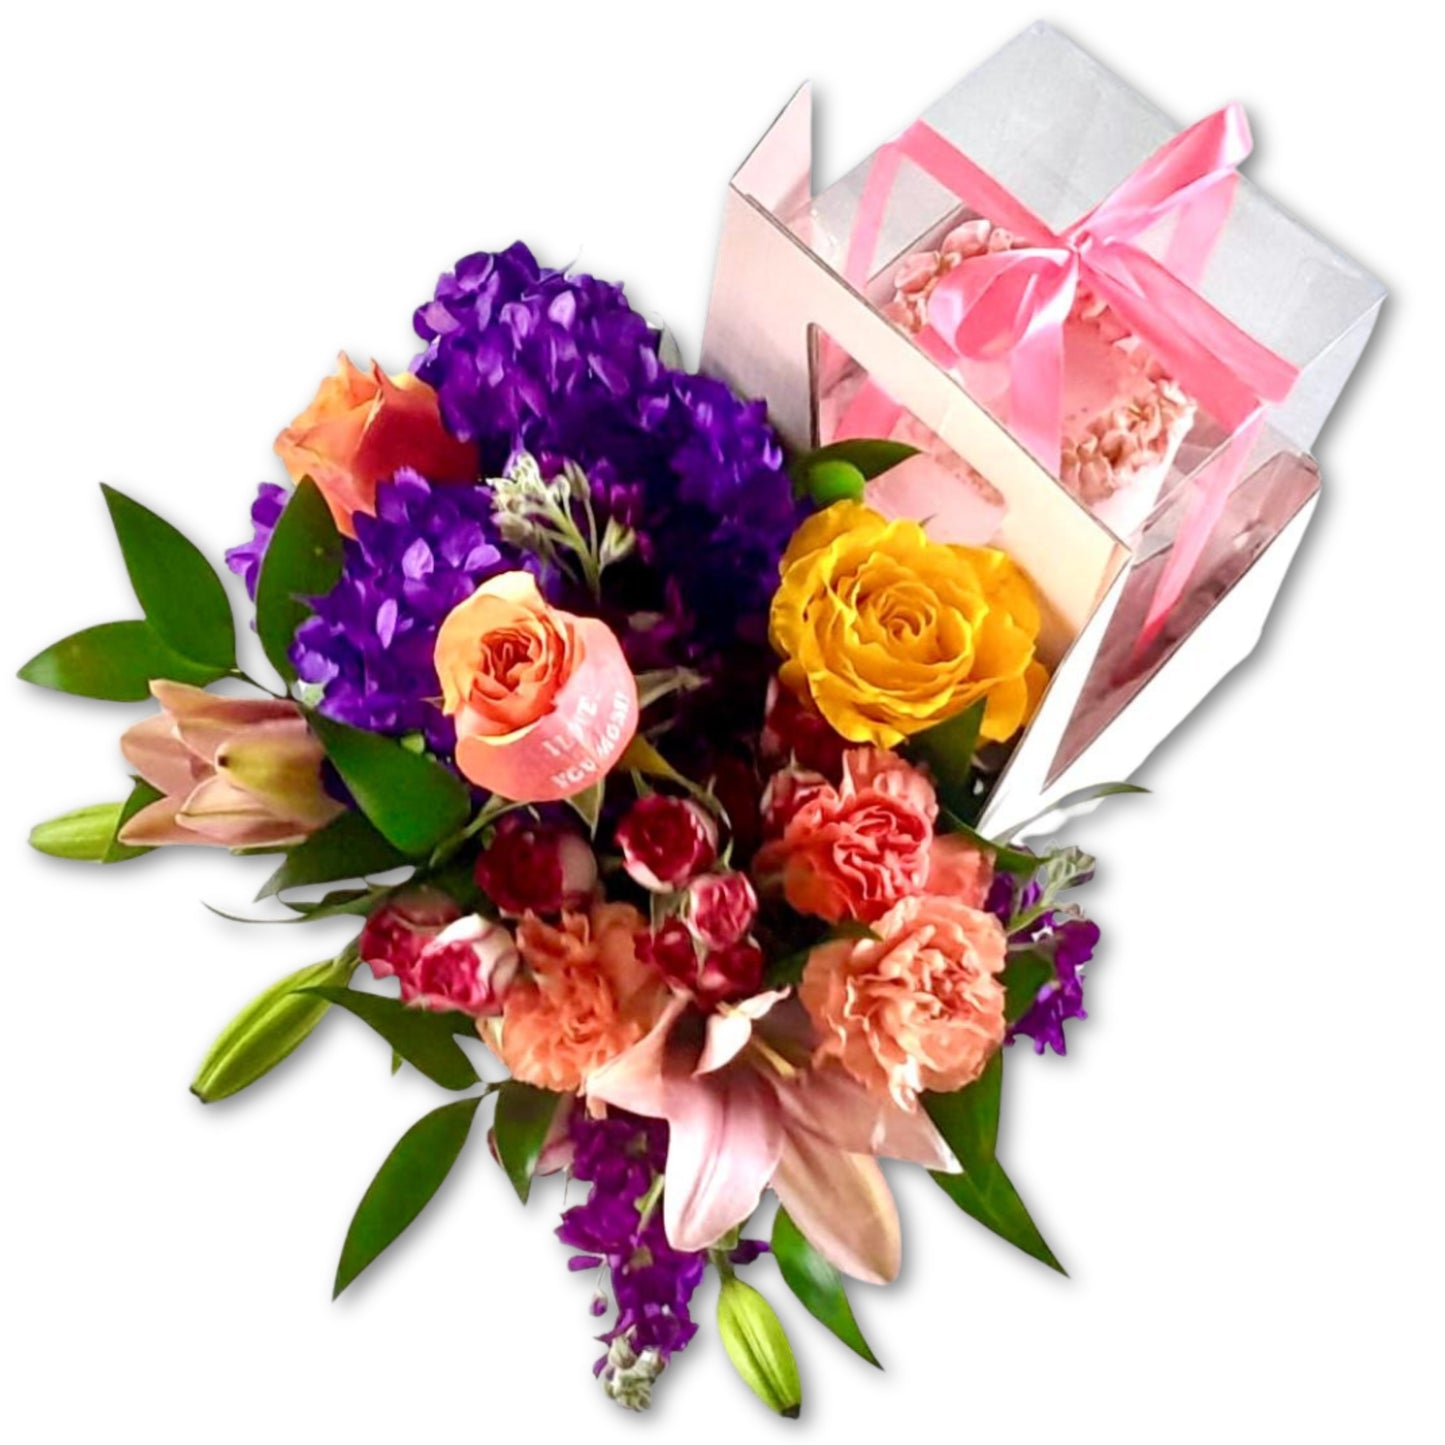 Cake & Flowers Giftbox